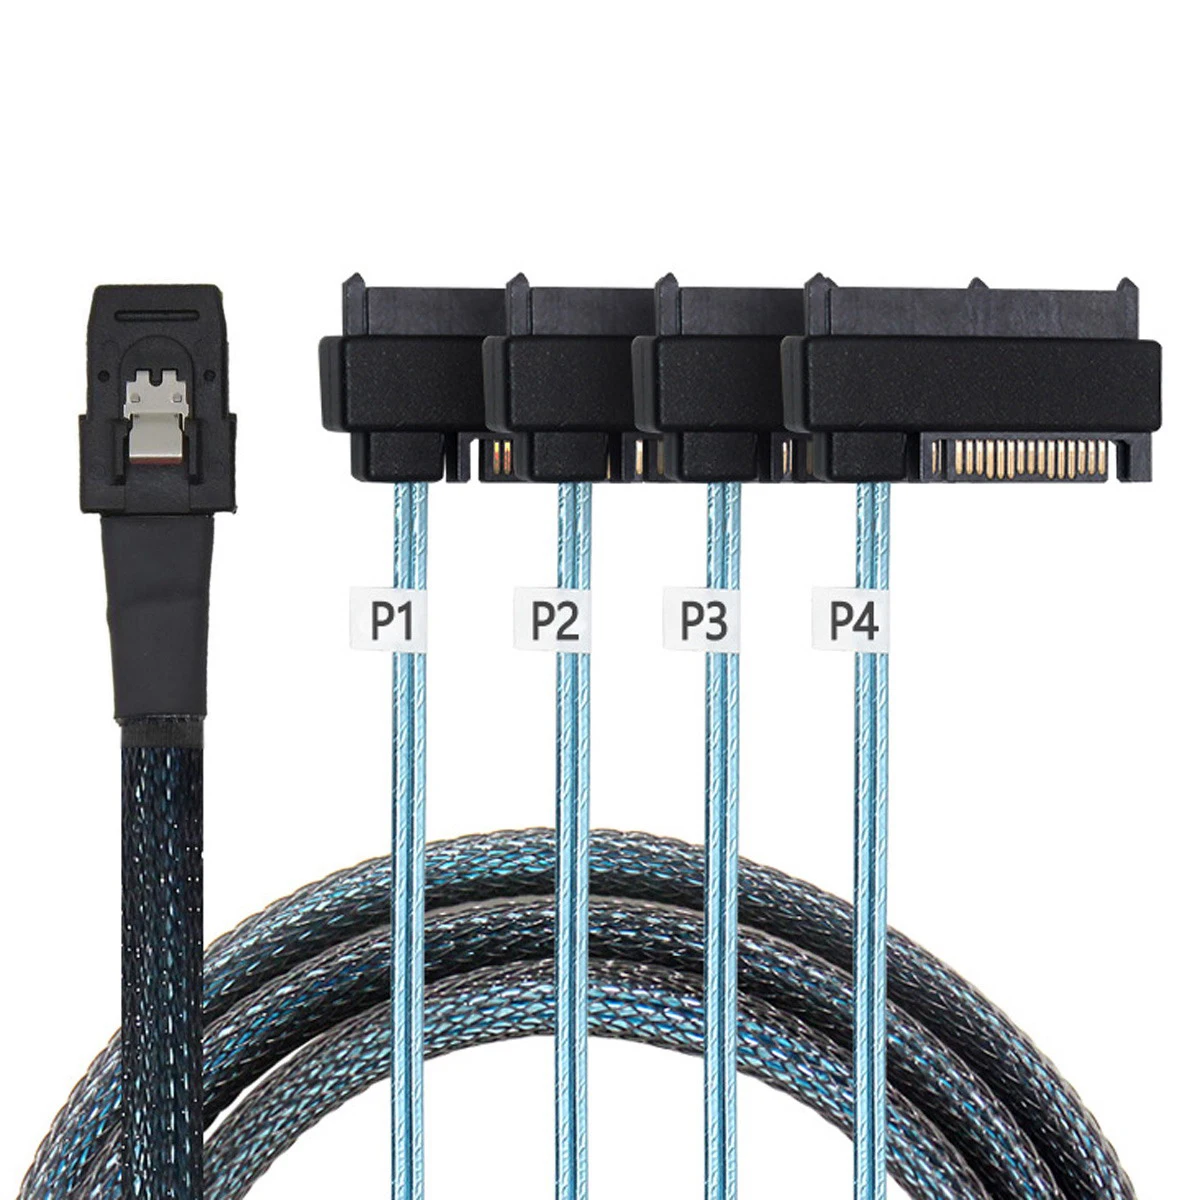 Мини SAS кабель внутренний 36 Pin Mini SFF-8087 хоста до 4 SFF-8482 целевой Жесткий диск и SATA